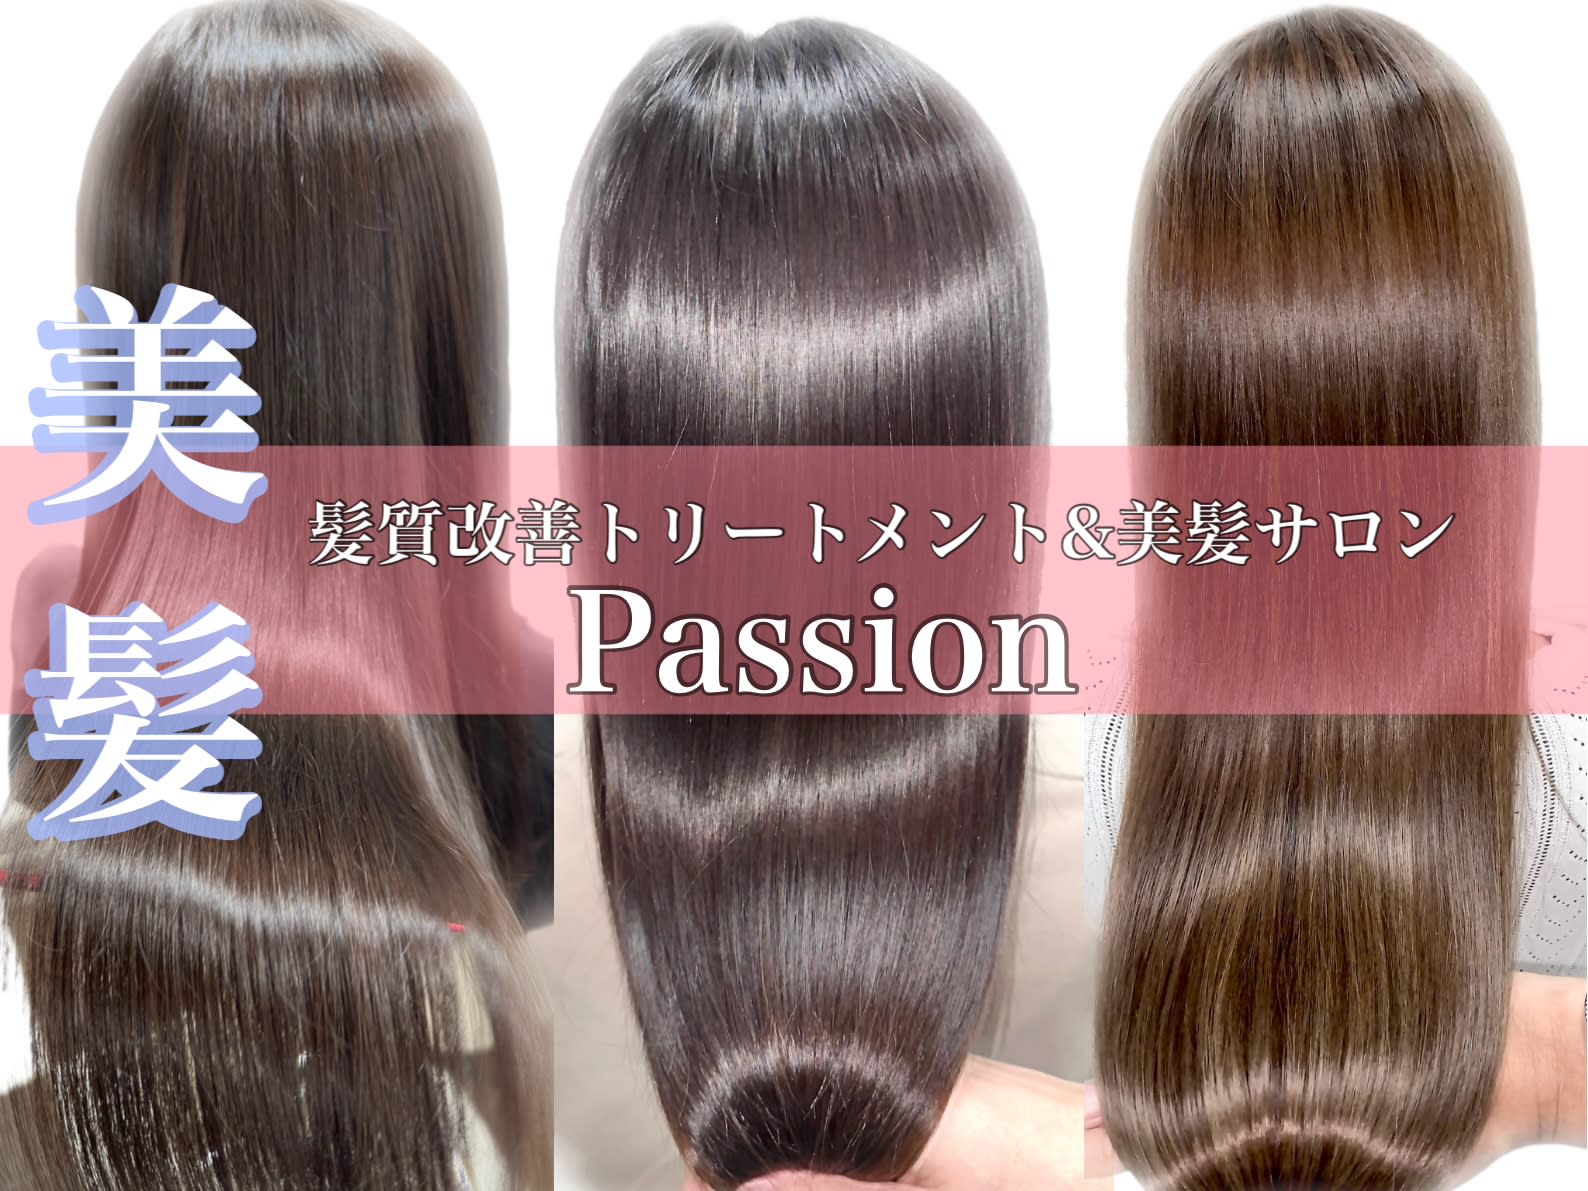 Total Beauty Passion 茨木店のアイキャッチ画像